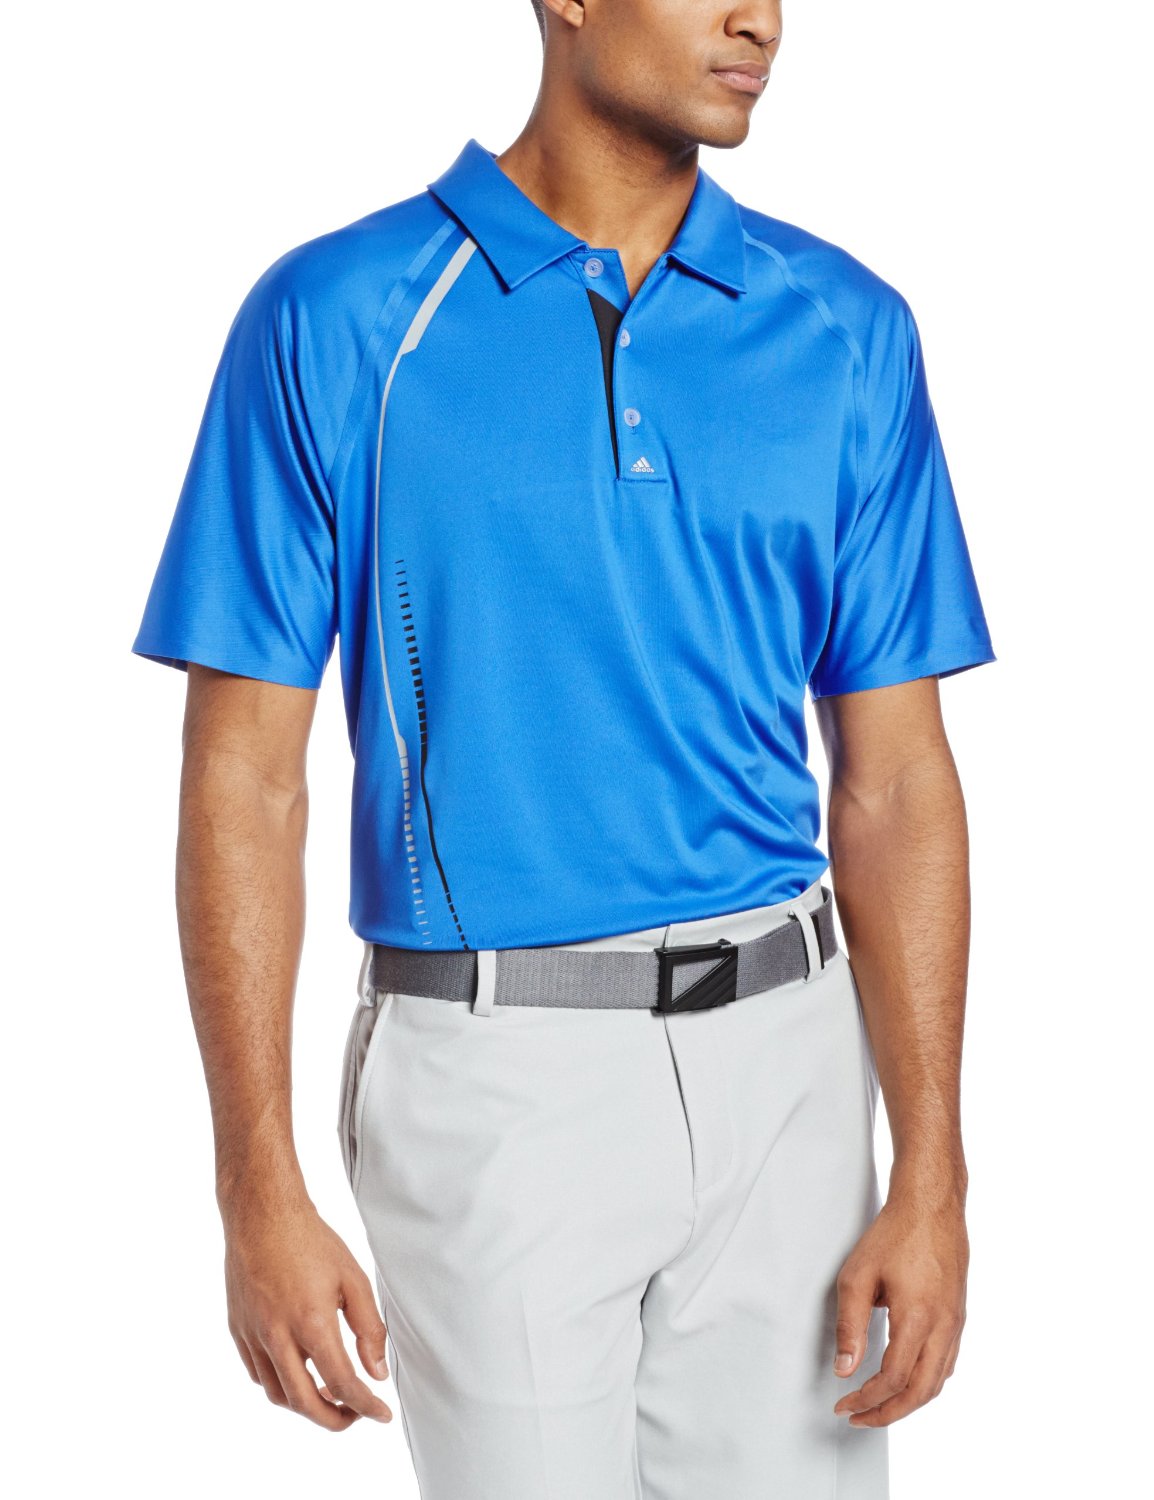 Adidas Mens Climacool Graphic Print Golf Polo Shirts